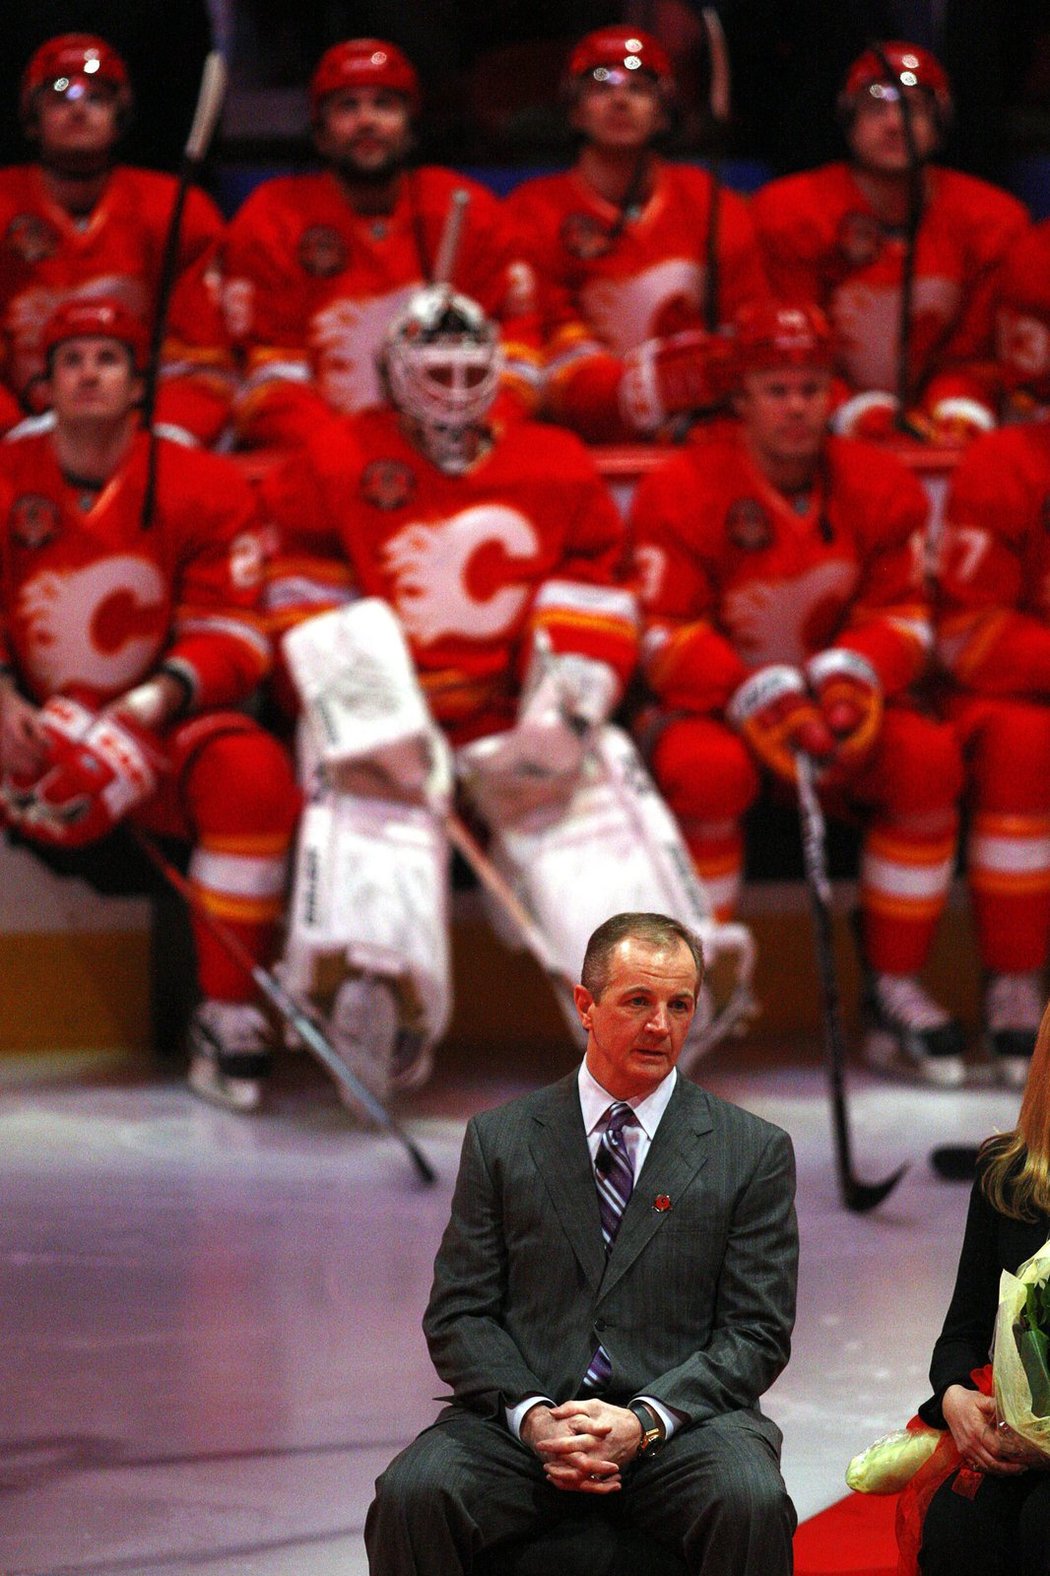 Calgary Flames ocenili svého bývalého obránce a člena Síně slávy Ala MacInnise.